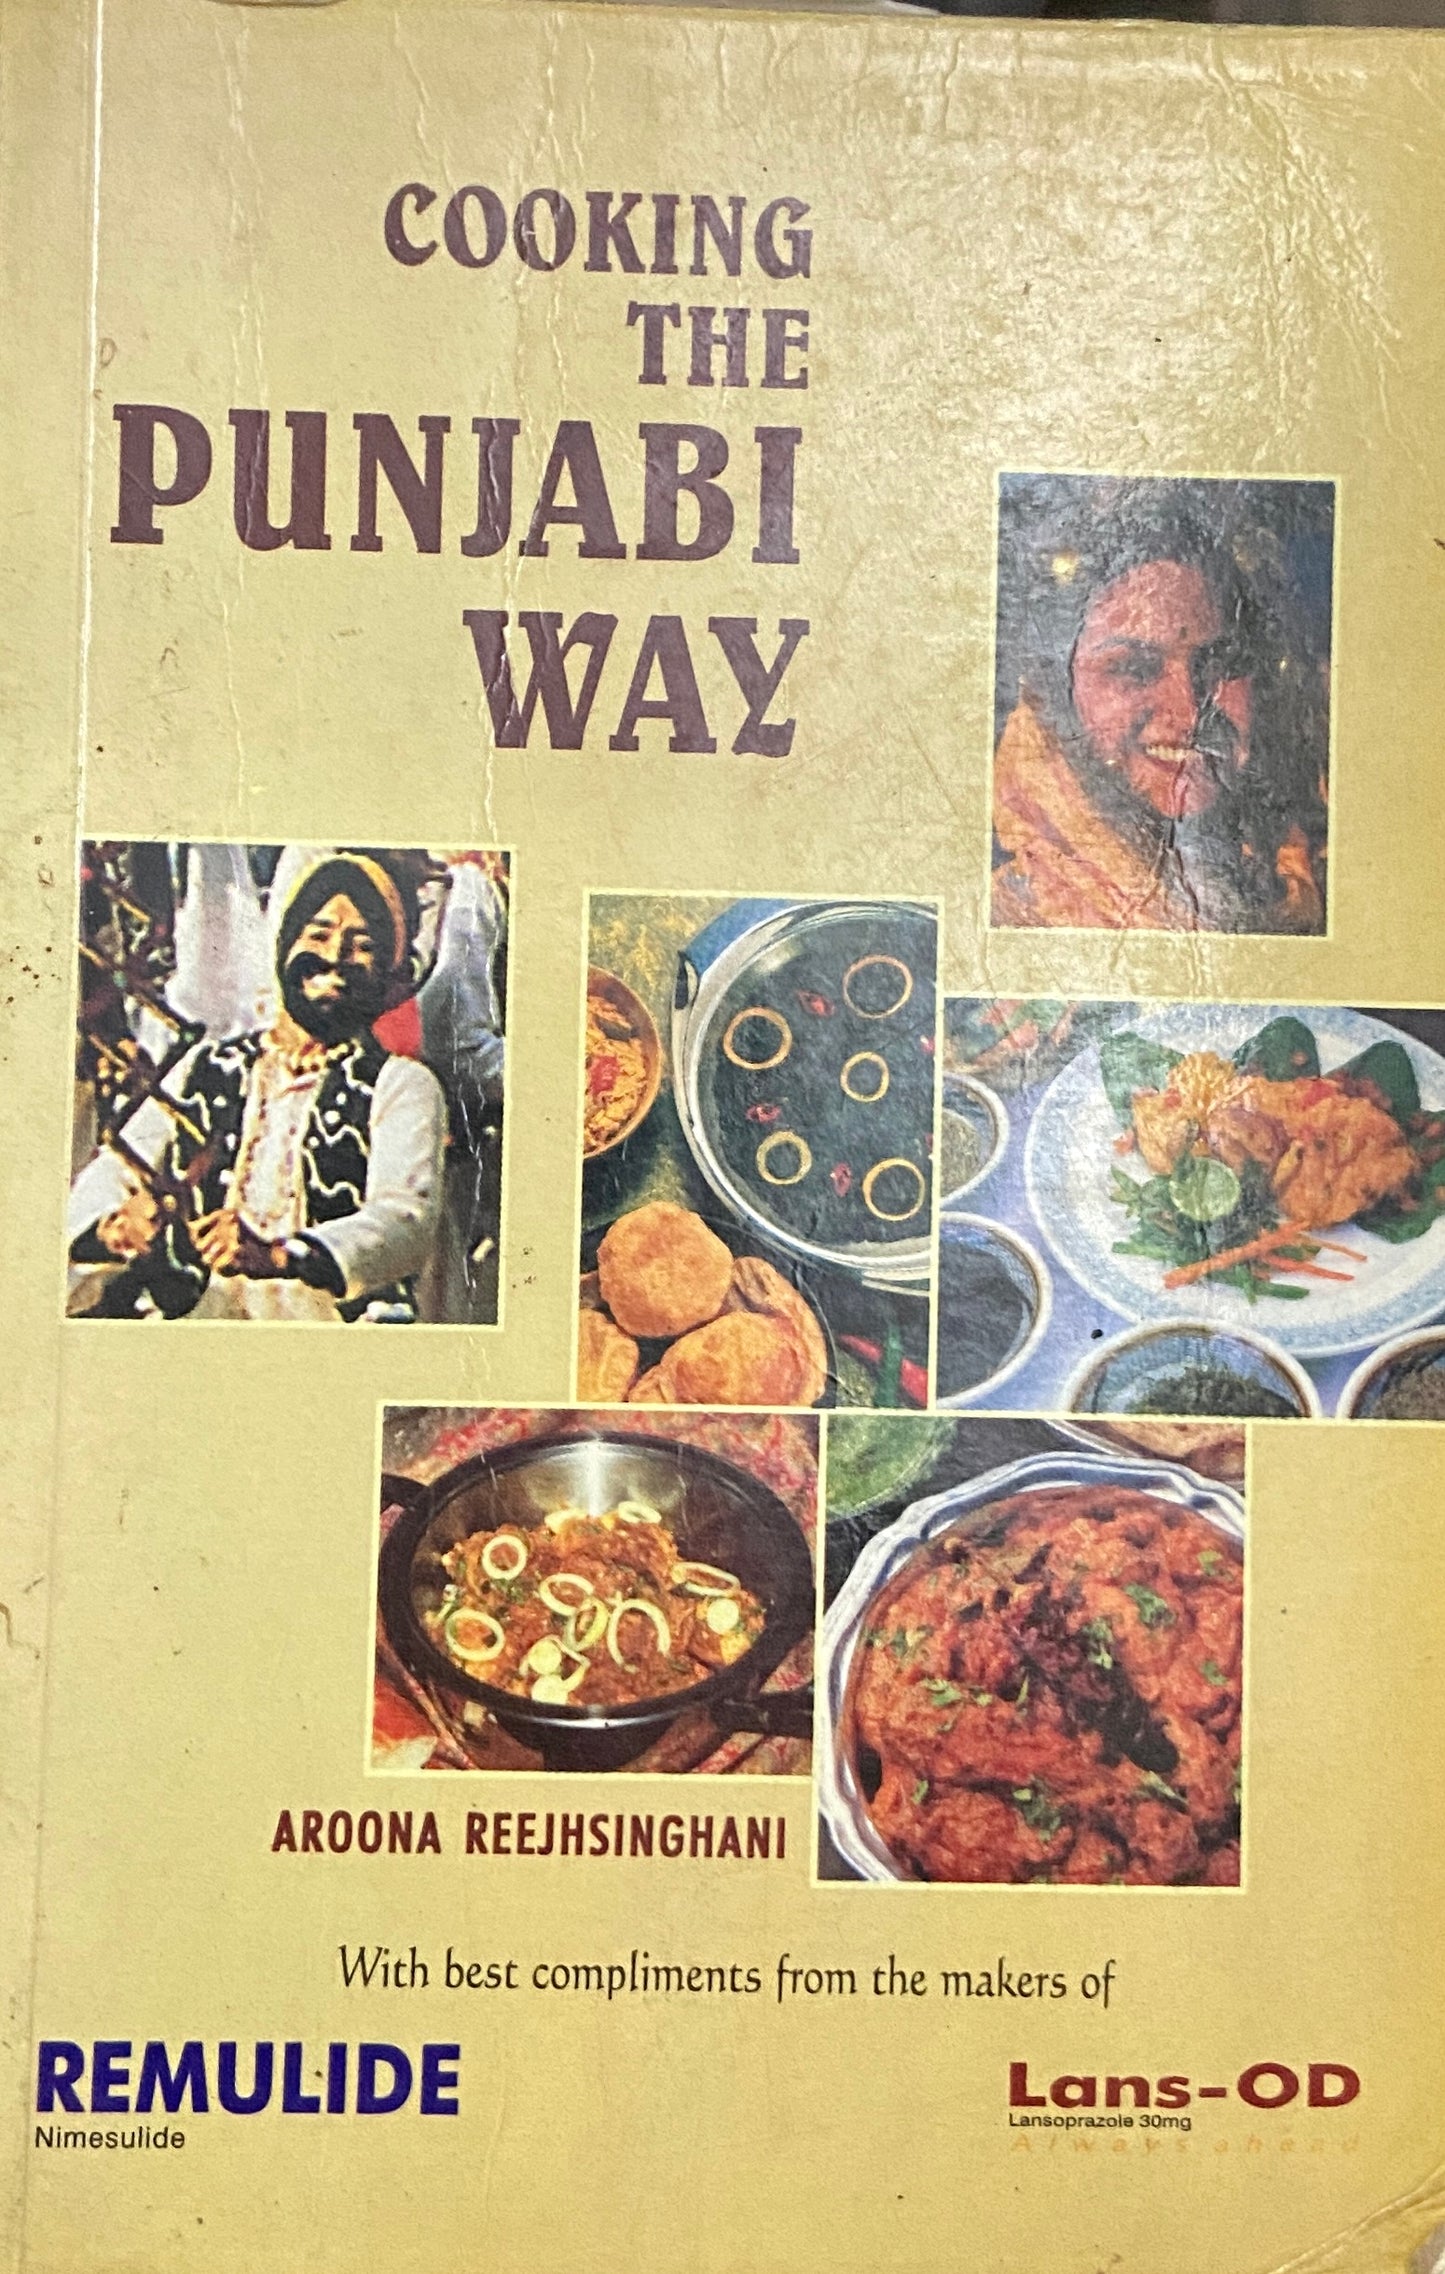 Cooking The Punjabi Way by Aroona Reejhsinghani